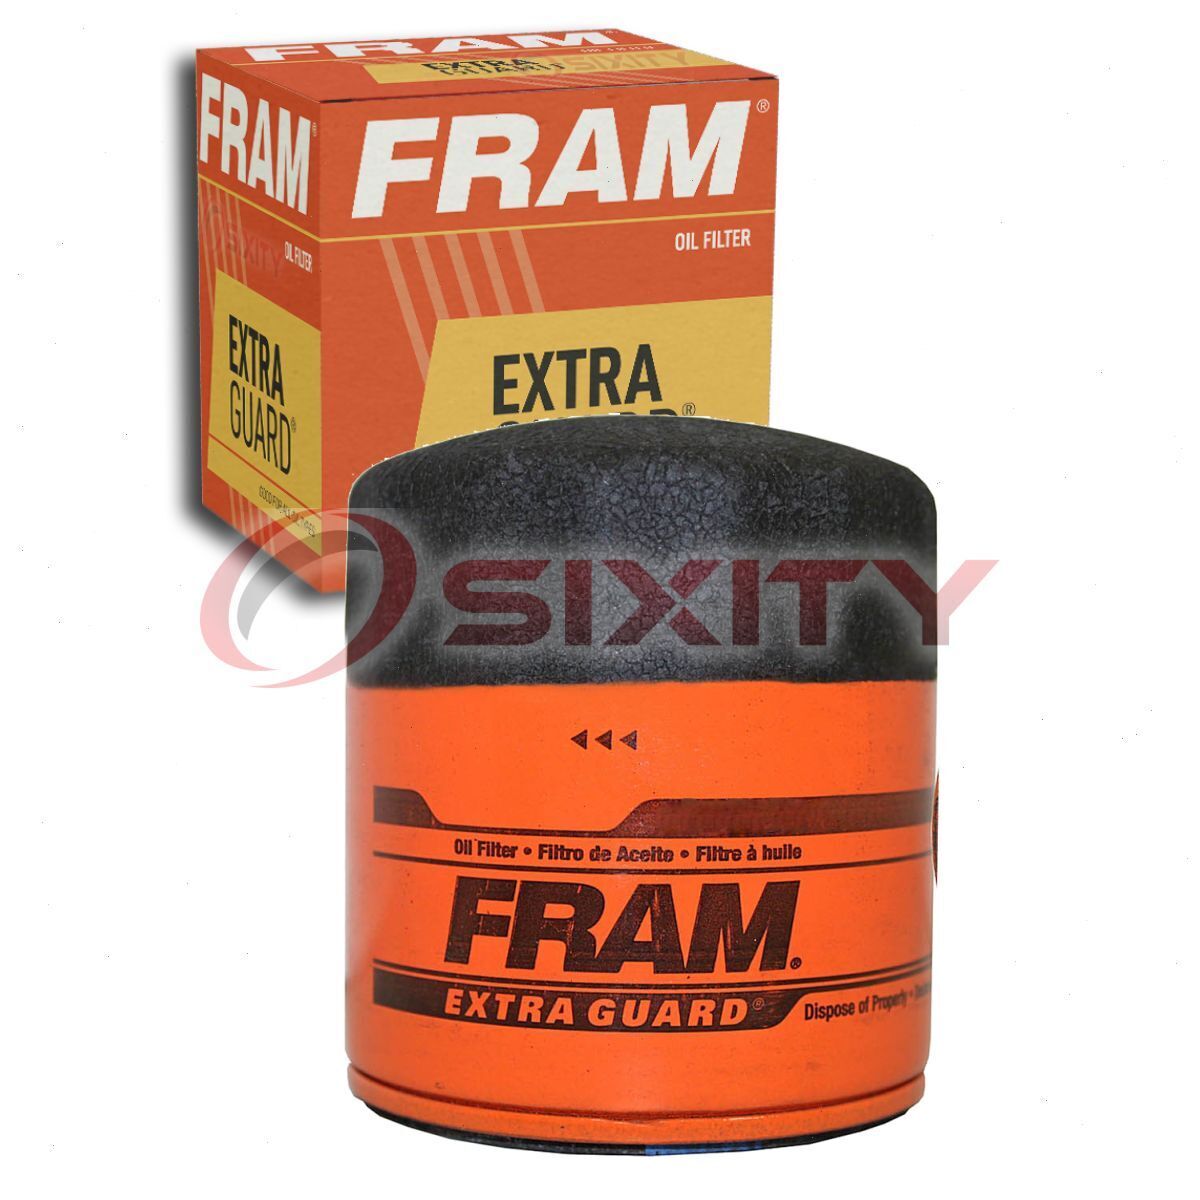 FRAM Extra Guard Engine Oil Filter for 1978-1988 Oldsmobile Cutlass Supreme ua